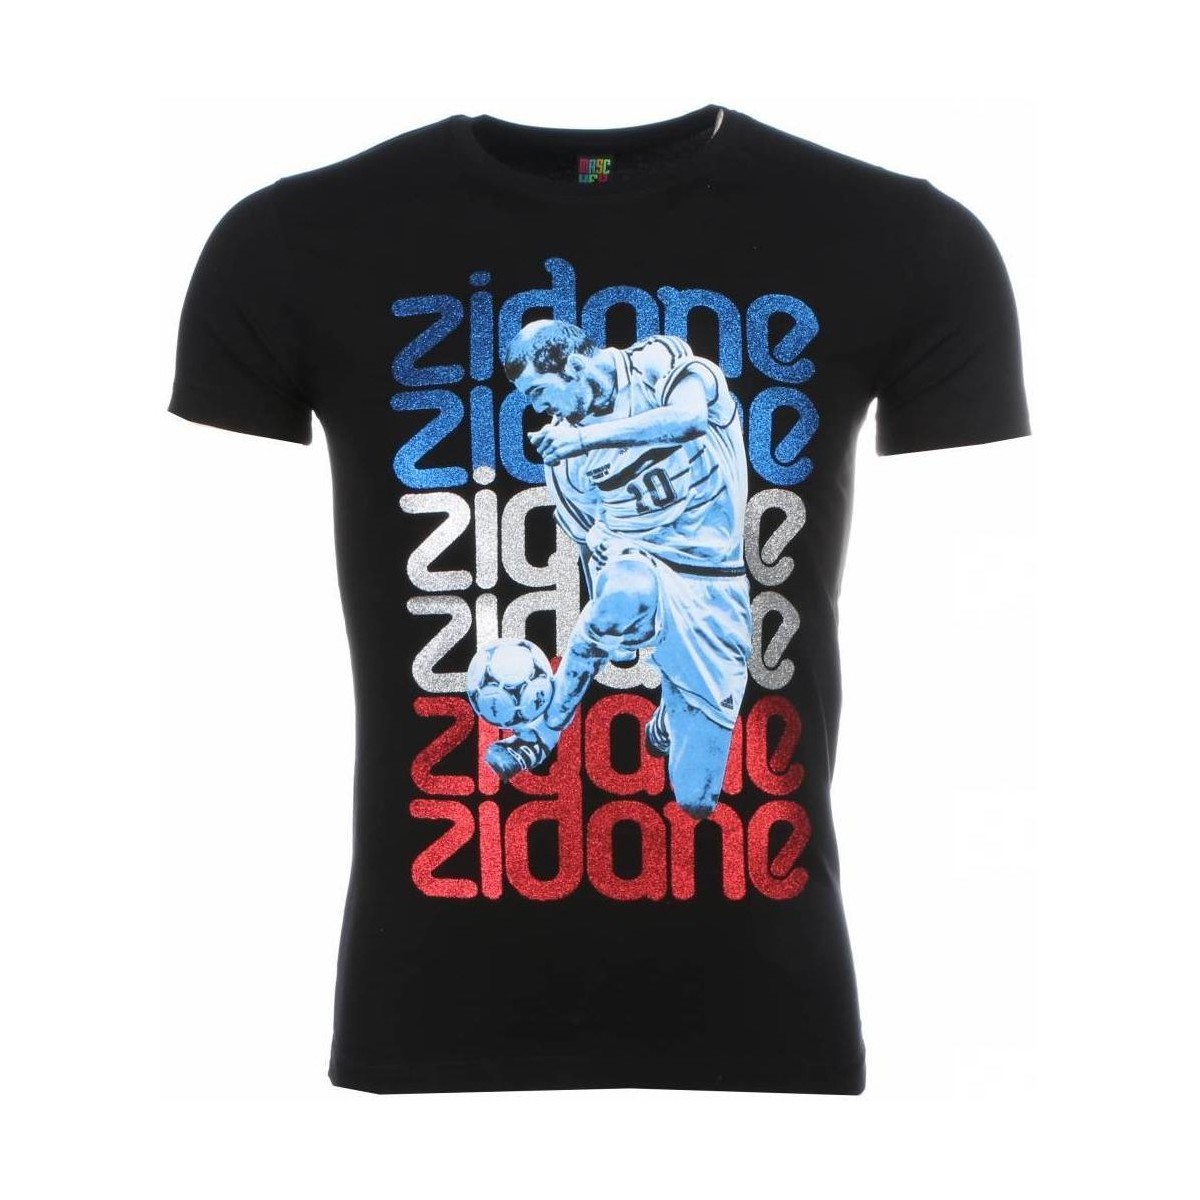 textil Hombre Camisetas manga corta Local Fanatic Zidane Print Negro